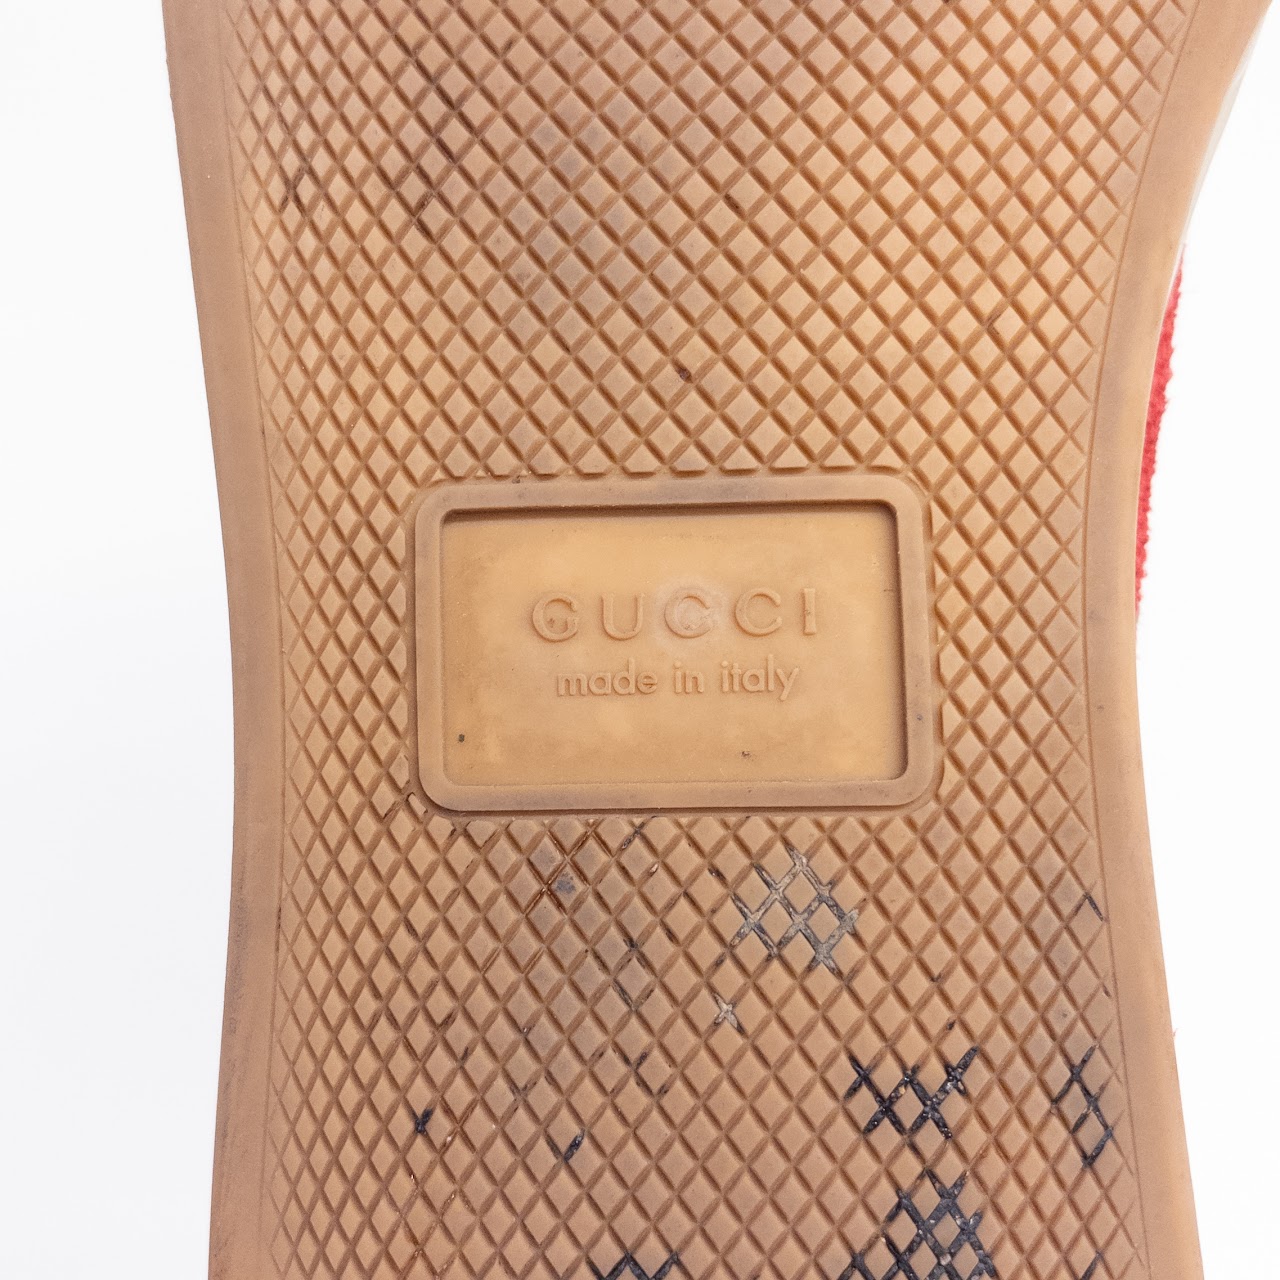 Gucci GG Suede & Nylon Sneakers